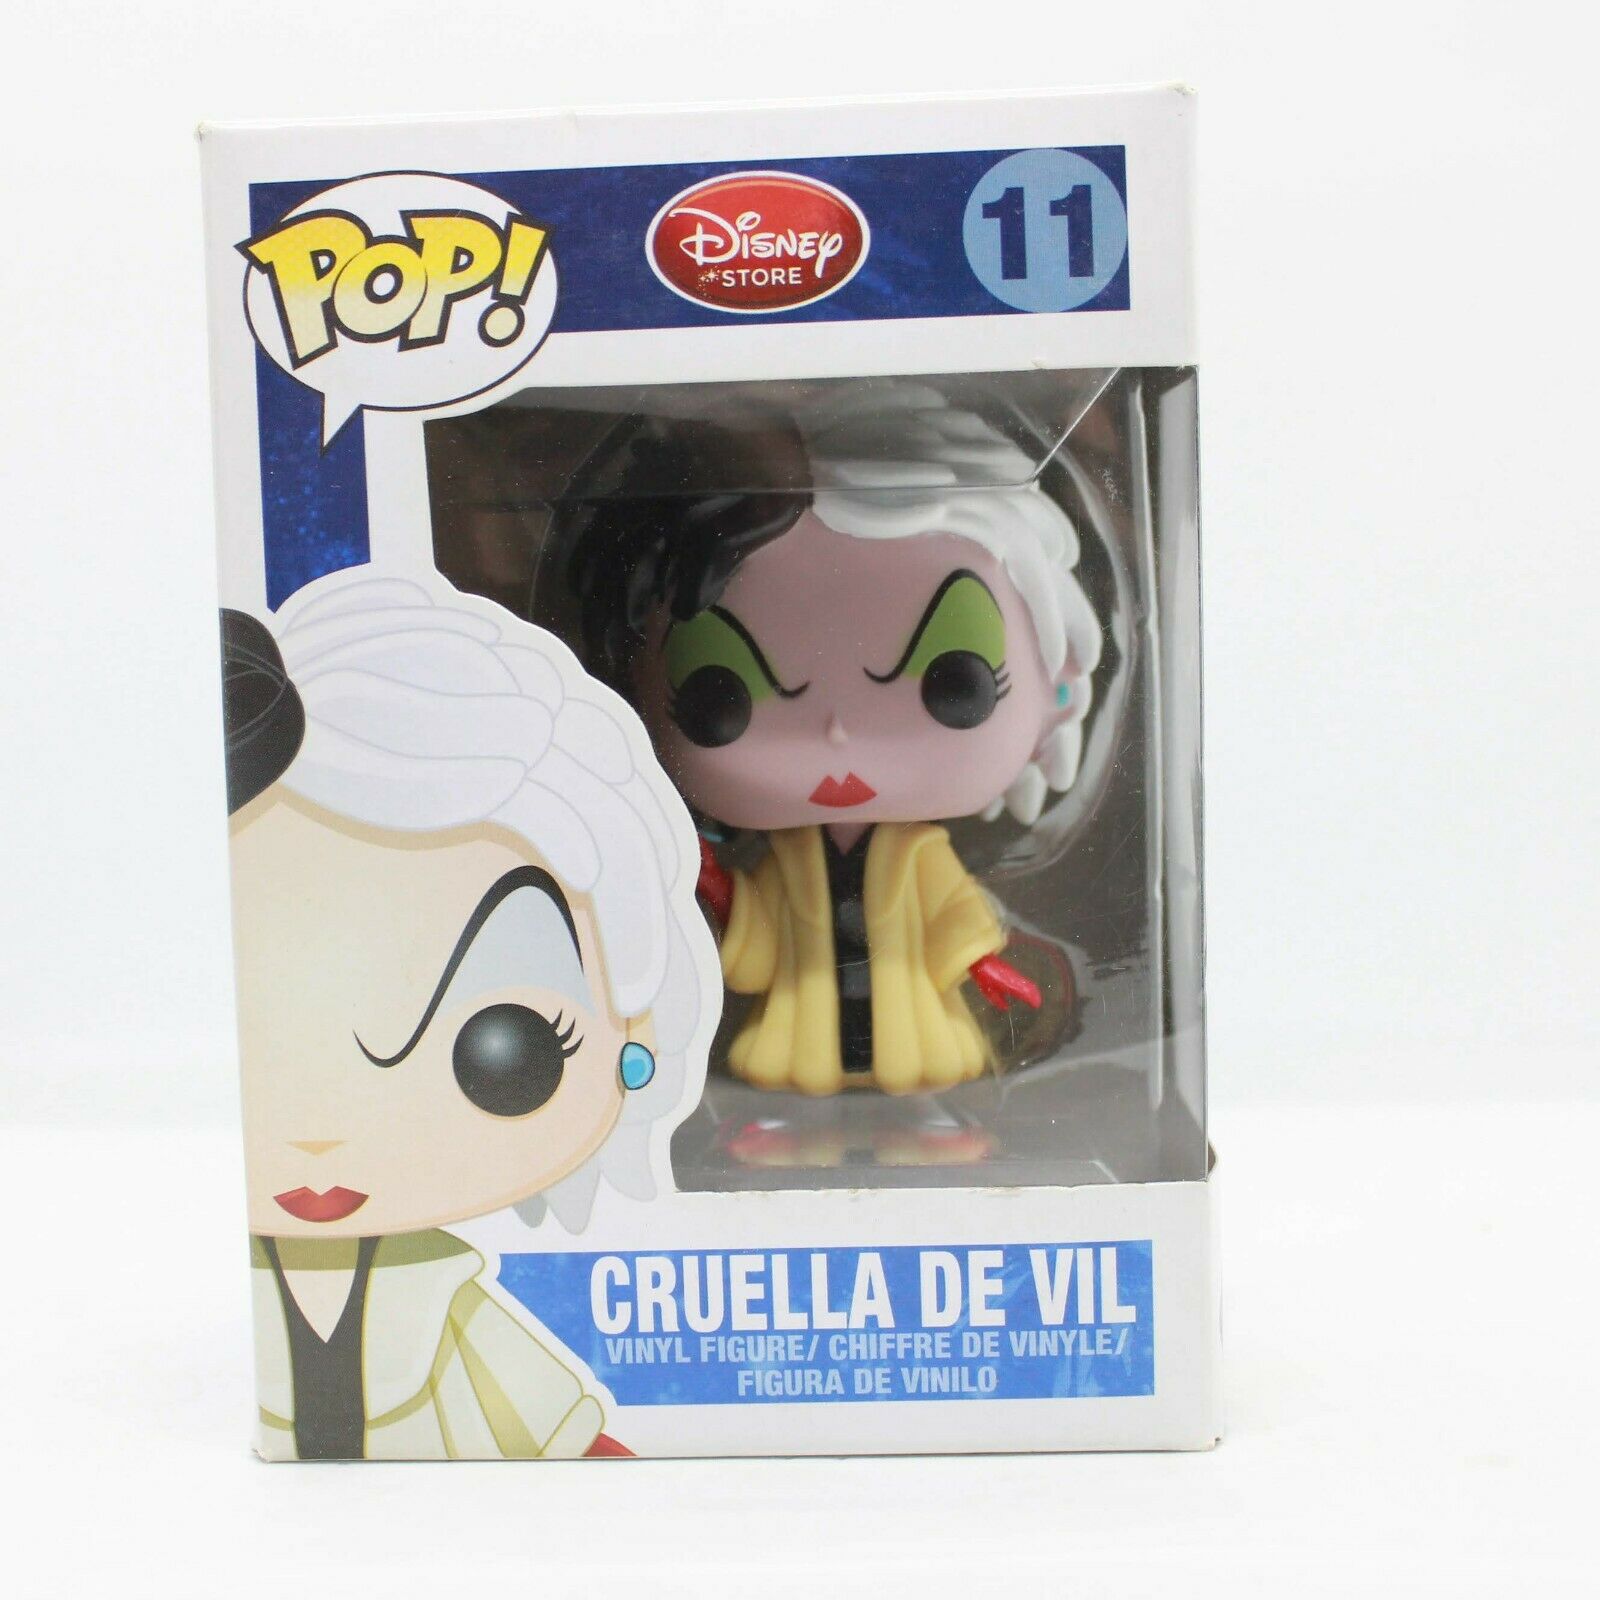 11 Cruella De Vil 101 Dalmations Disney Pop! Vinyl Figure by Funko